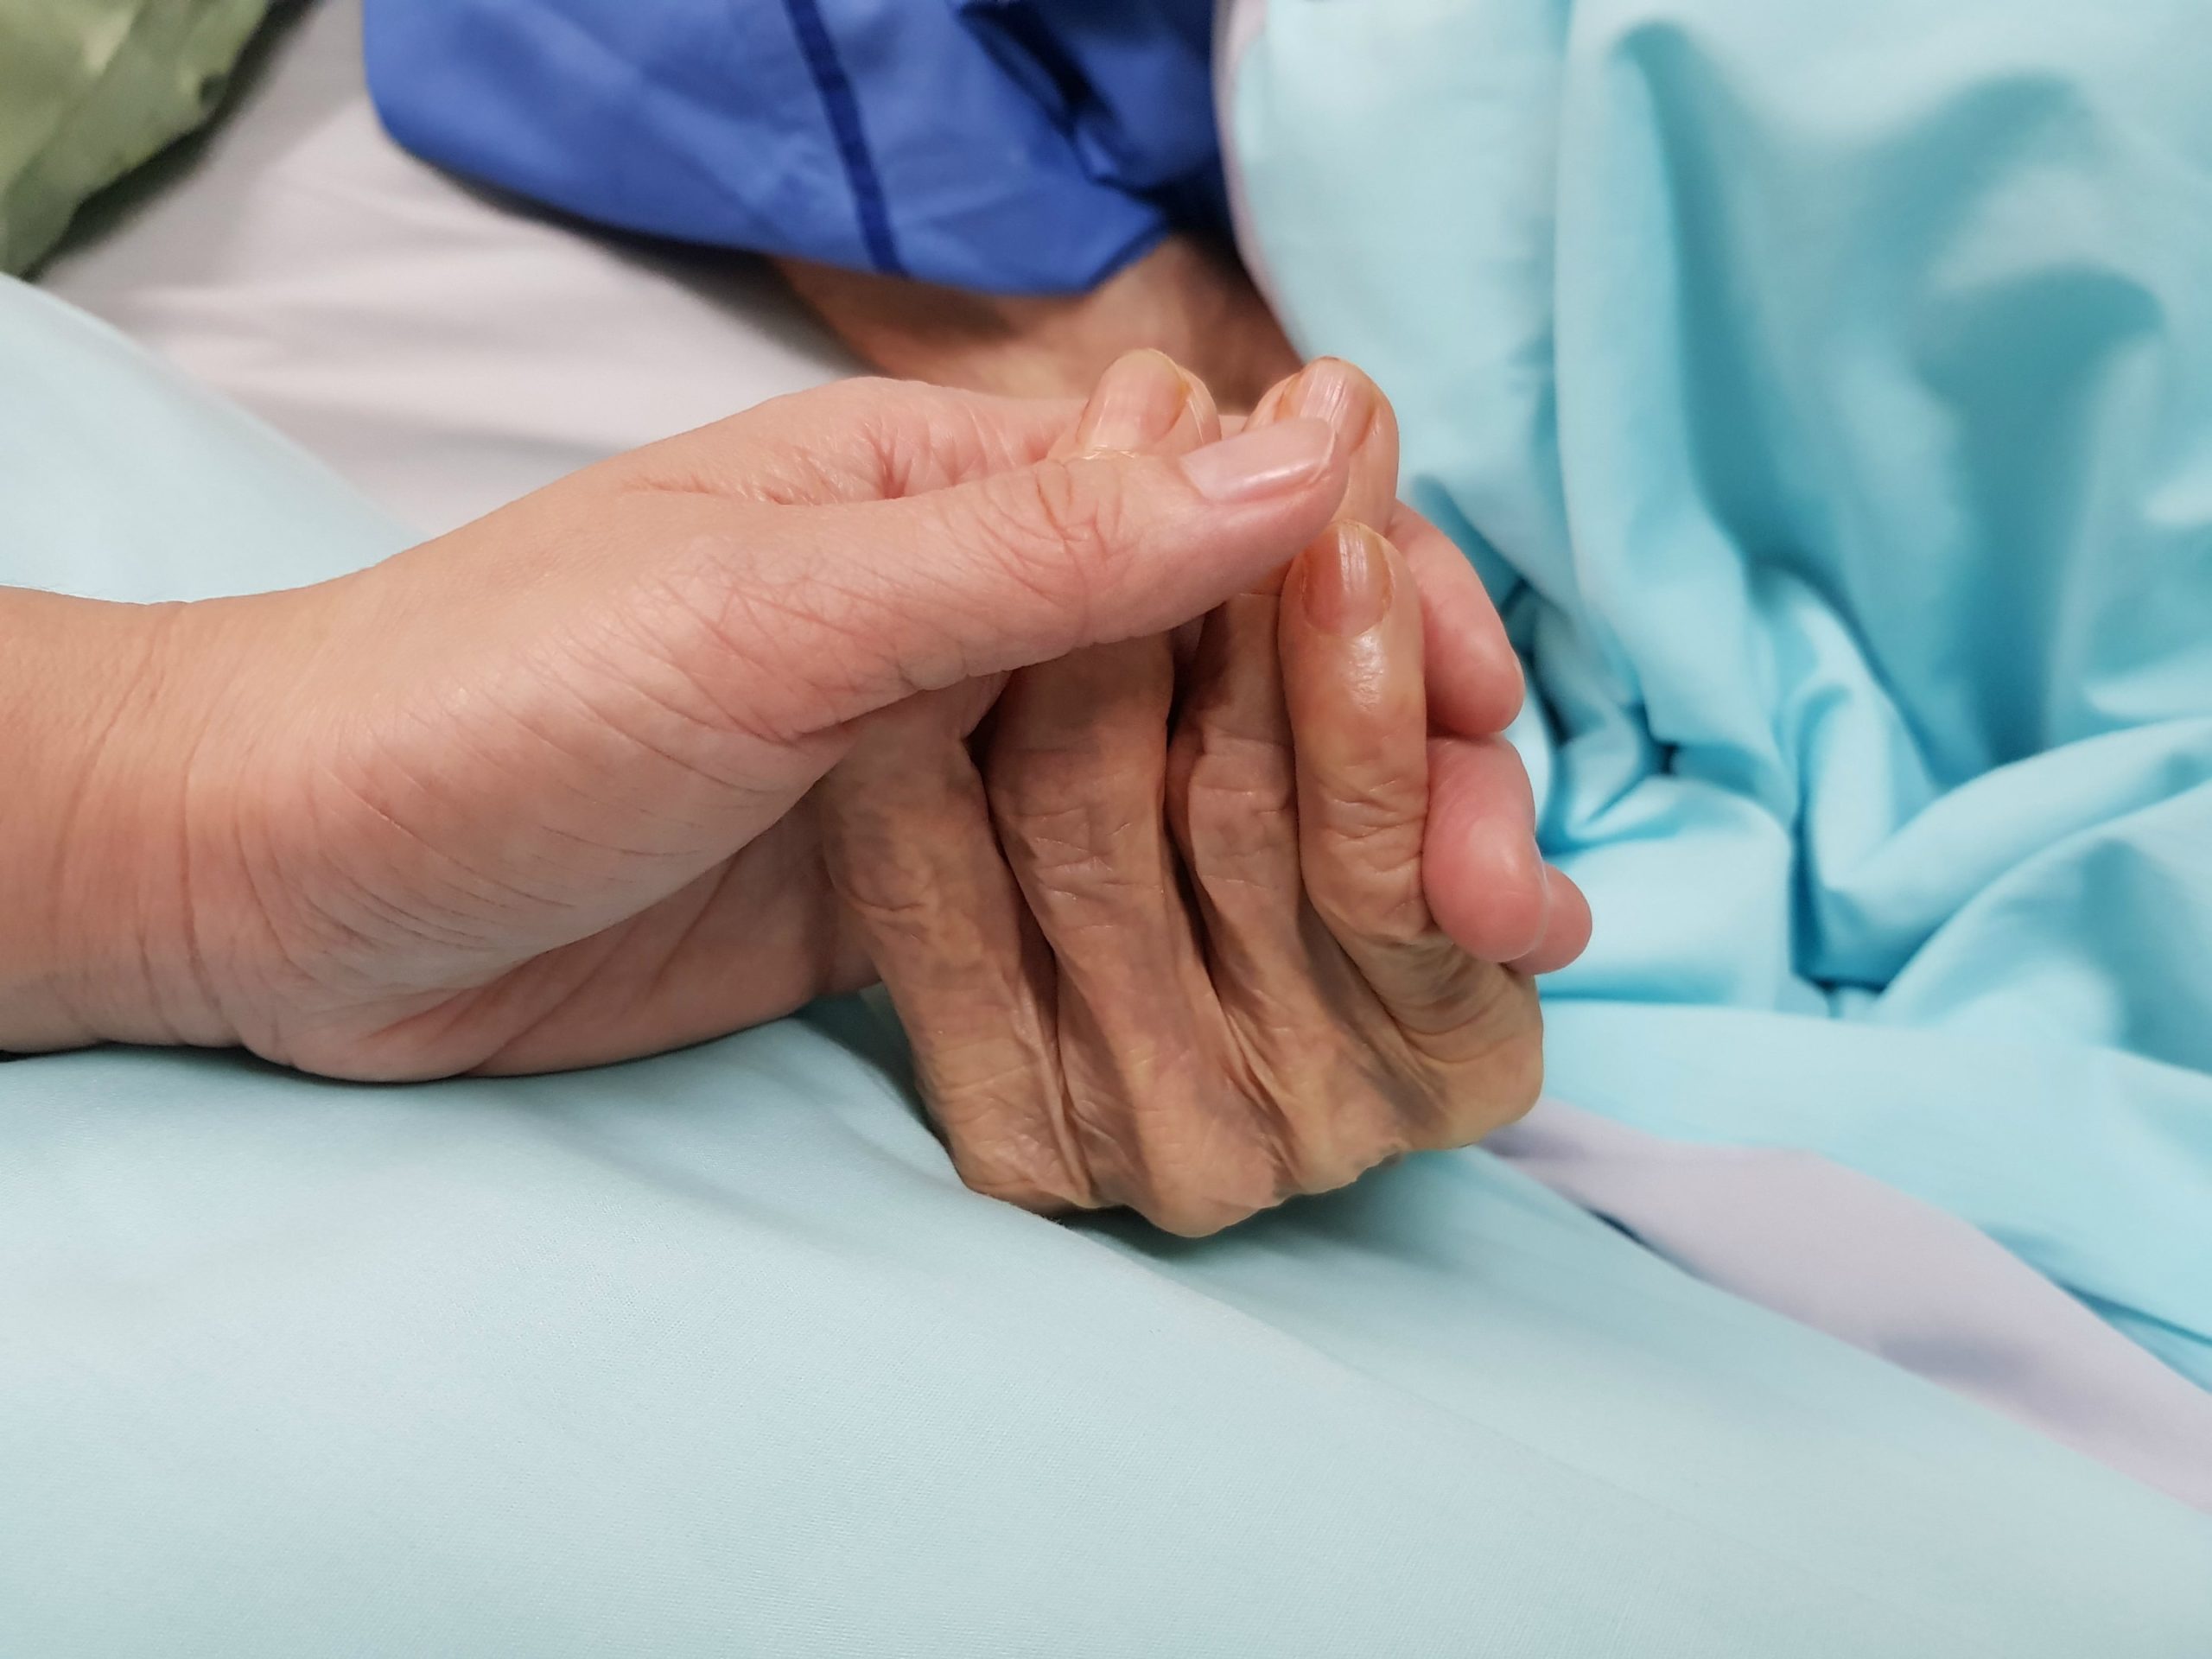 Benefits of palliative care